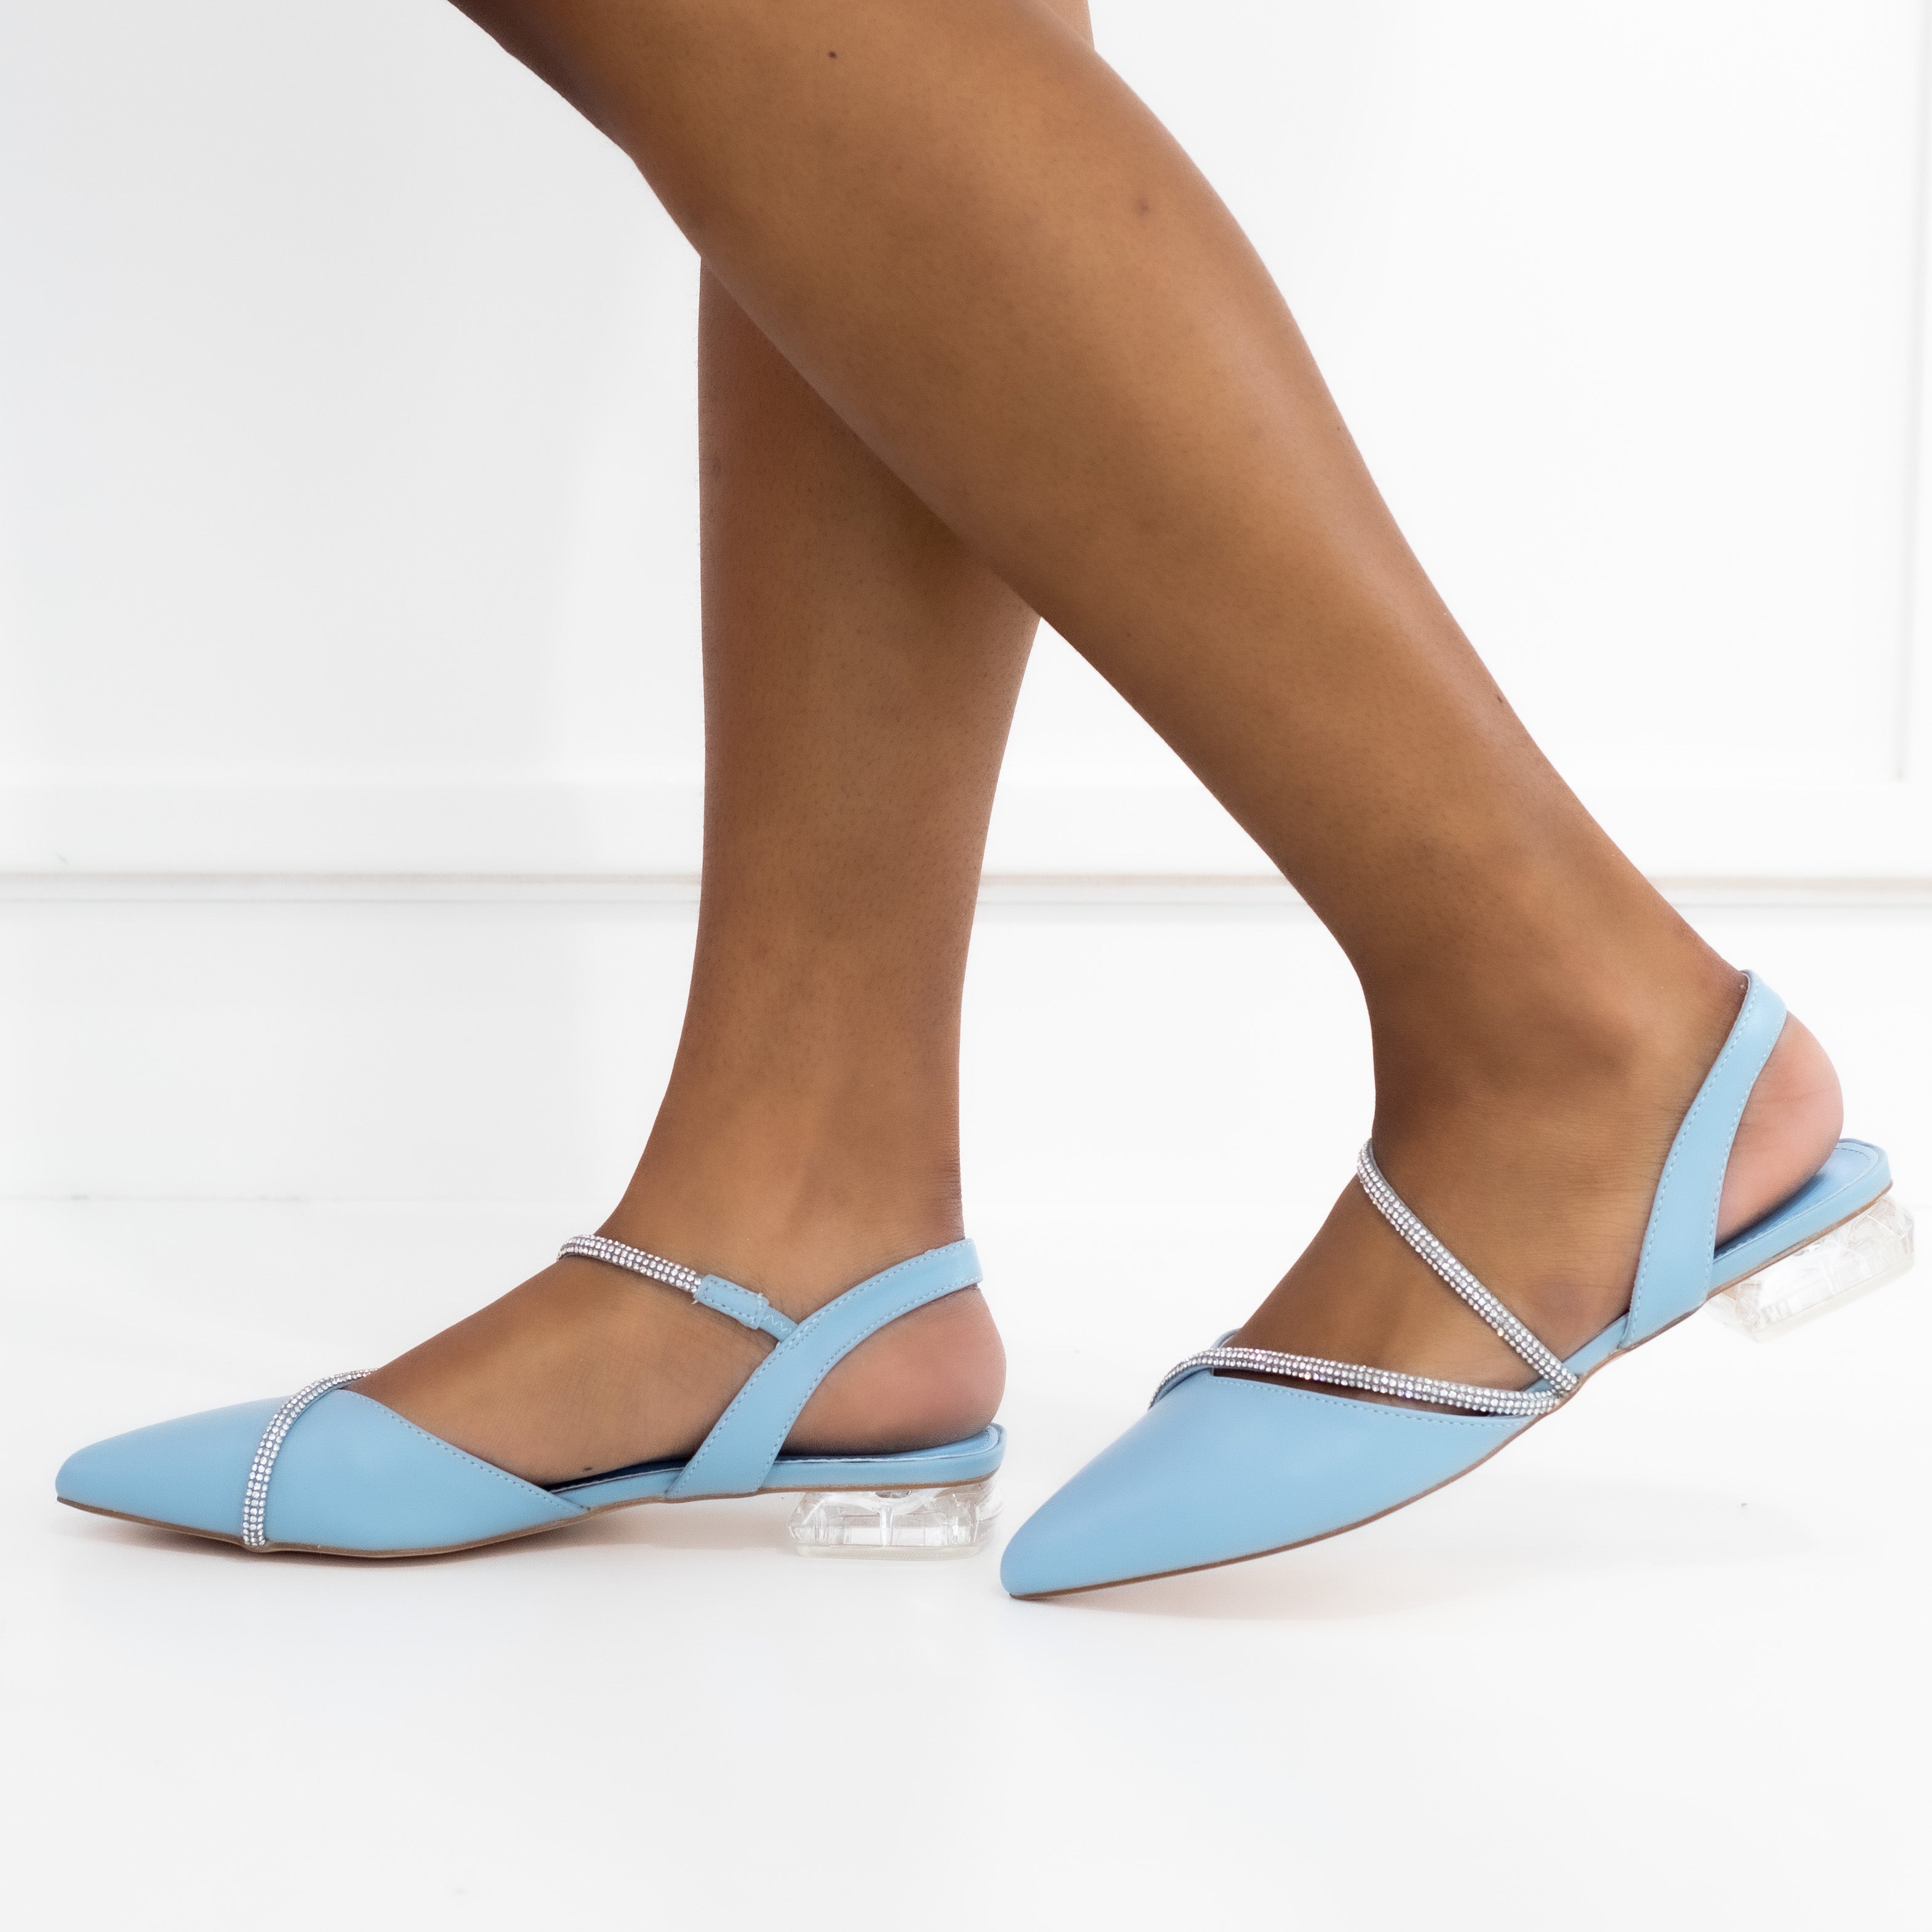 Giordana 2cm heel flat pump with diamanate detailed blue